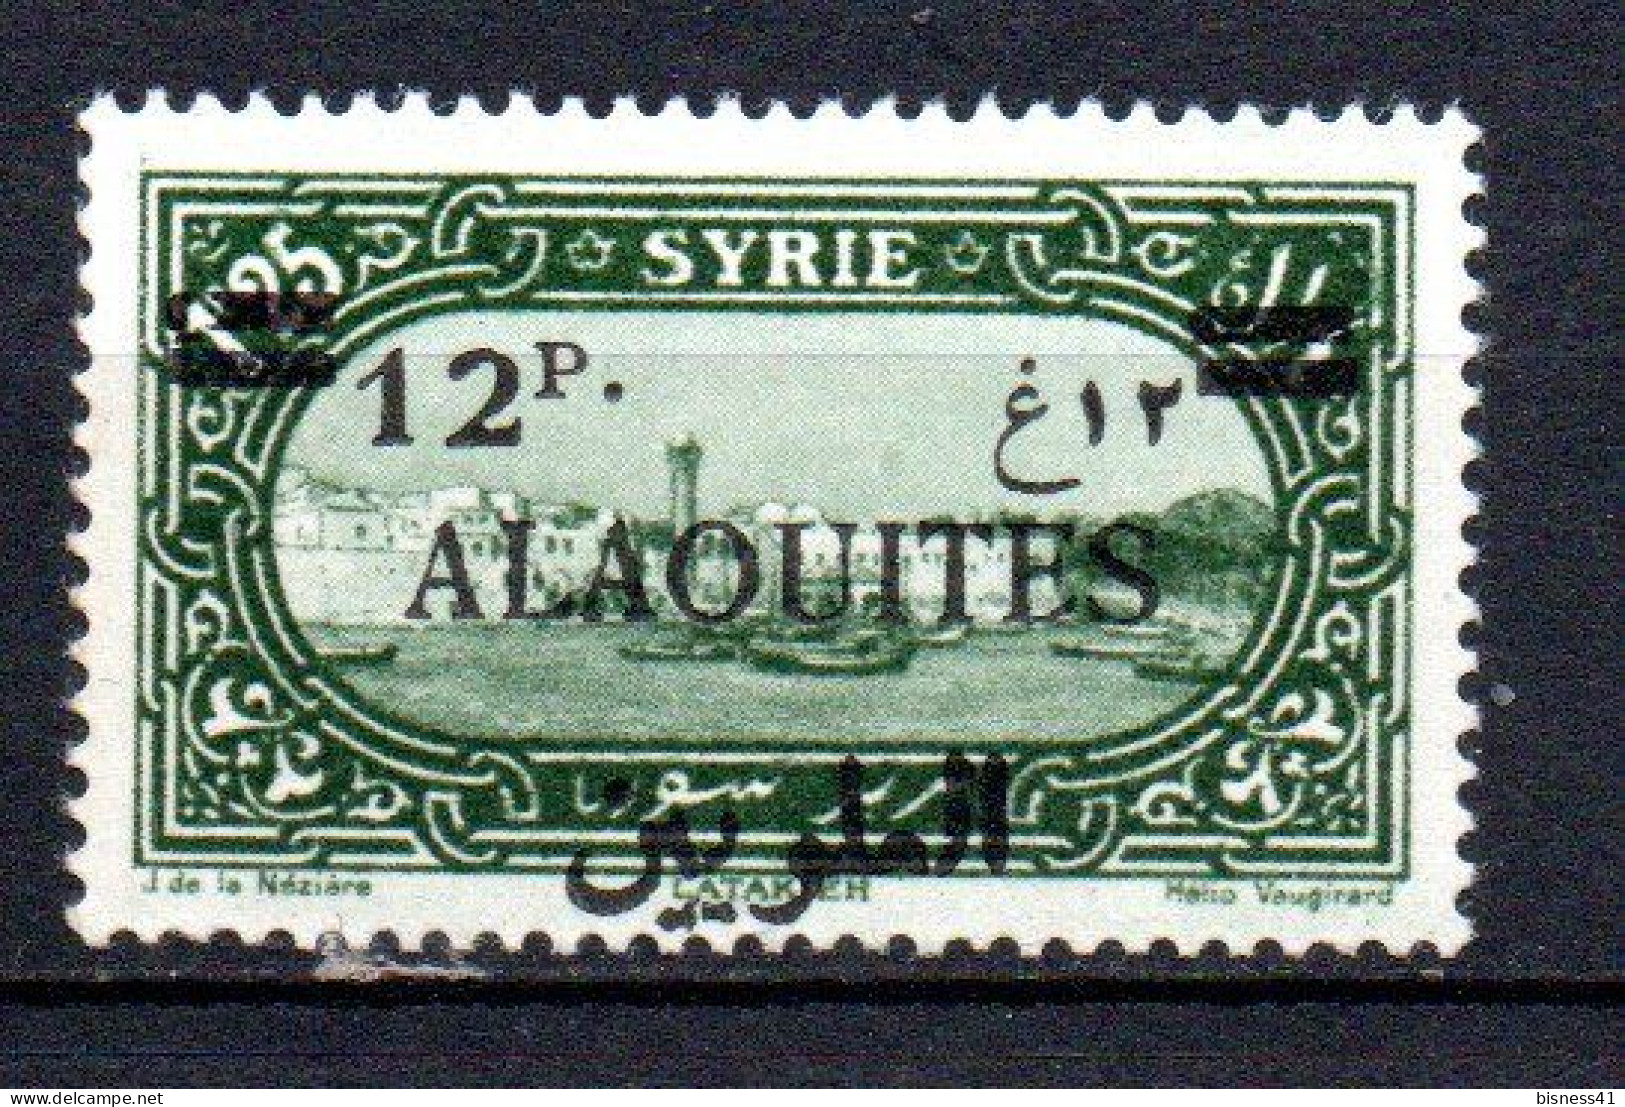 Col41 Colonies Alaouites  N° 39 Neuf X MH Cote 3,00€ - Unused Stamps